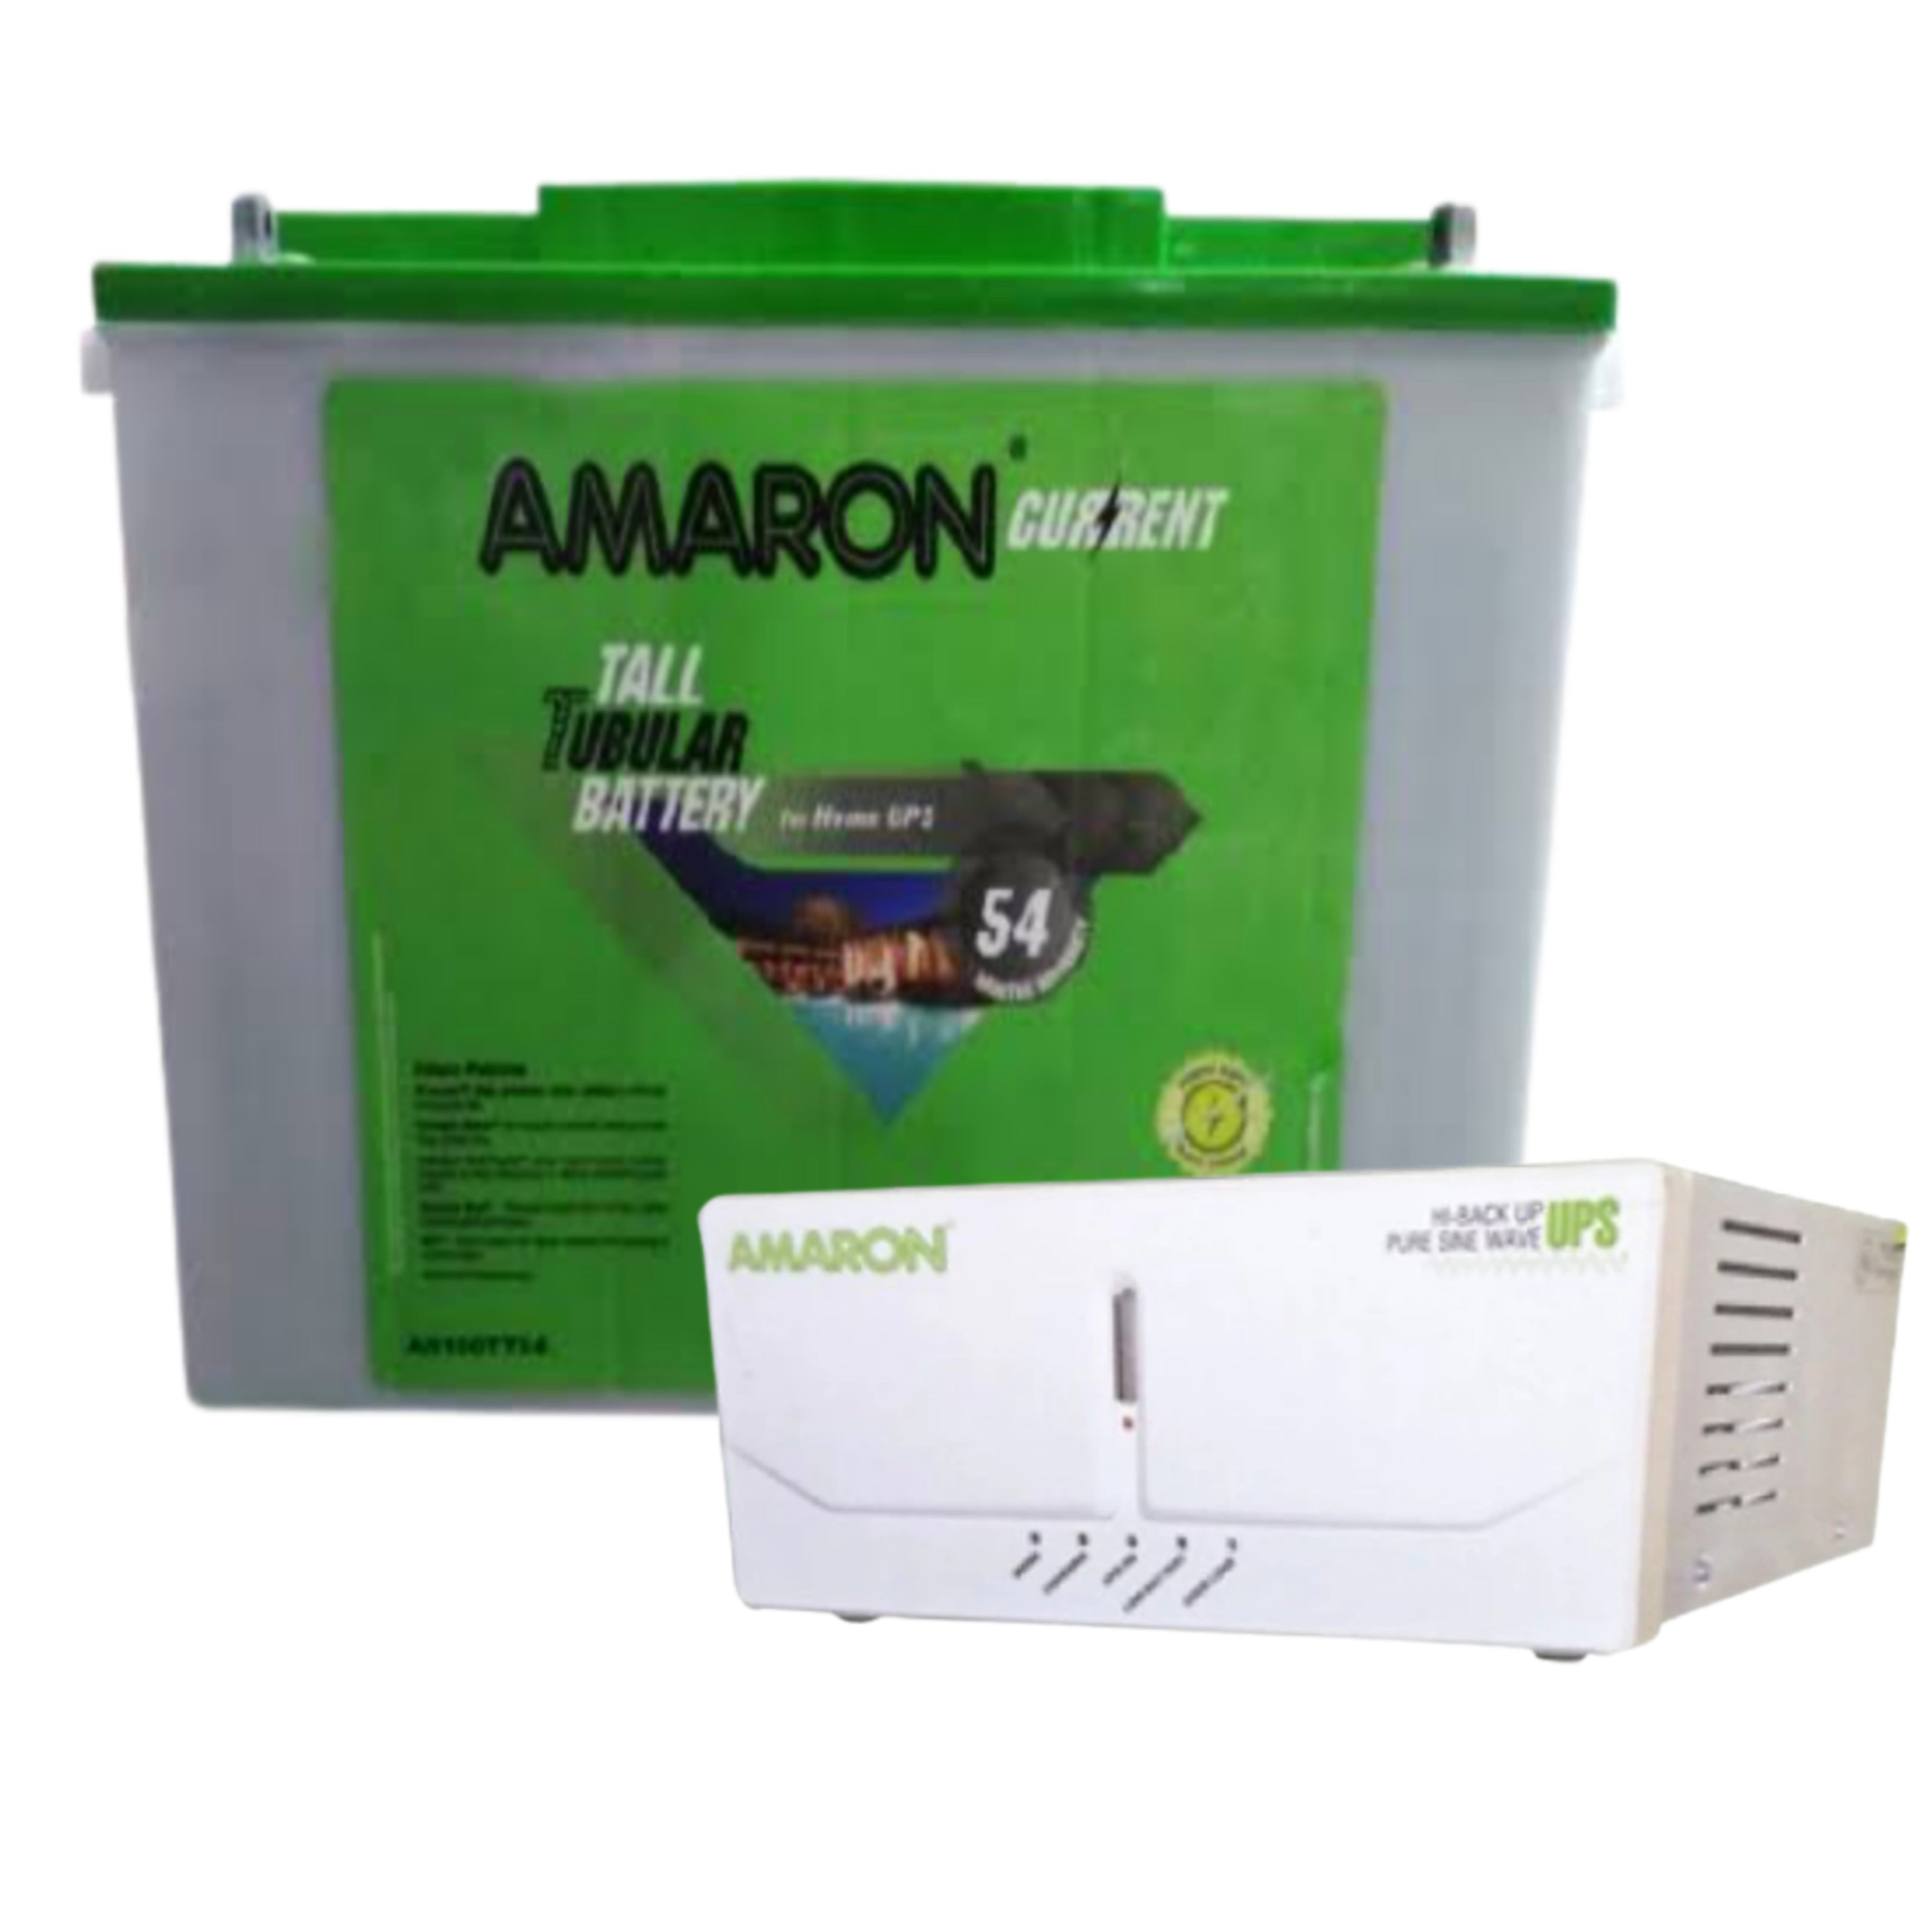 AMARON 1400 SINE WAVE UPS AND 2 PCS AMARON AAM-CR-AR150TT54